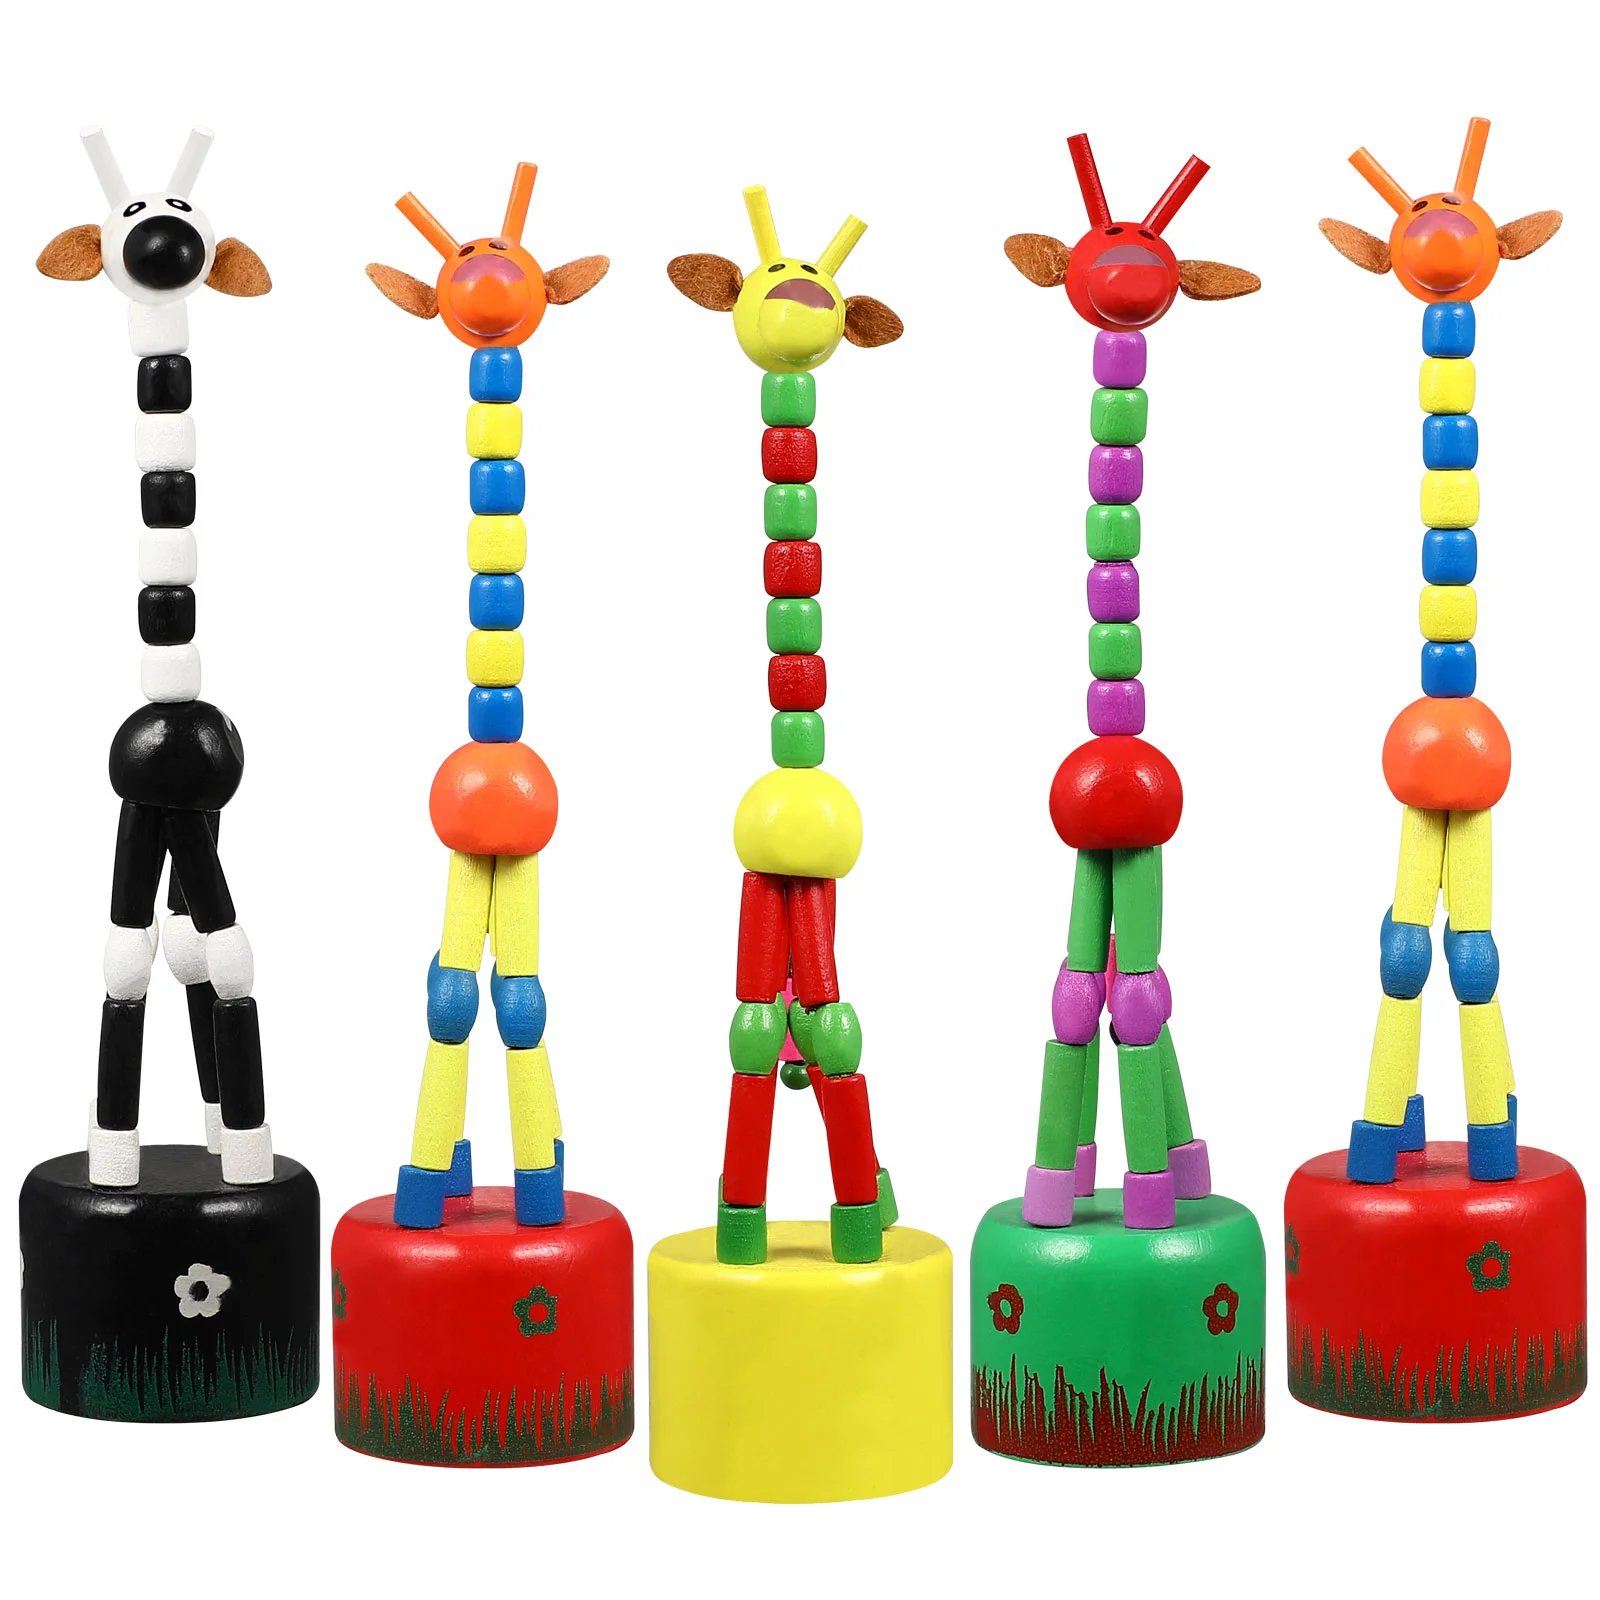 

Giraffe Puppets Wooden Finger Toys Toy Push Dancing Up Figurine Puppet Kids Animal Fidget Cartoon Rocking Toddlers Thumb Child